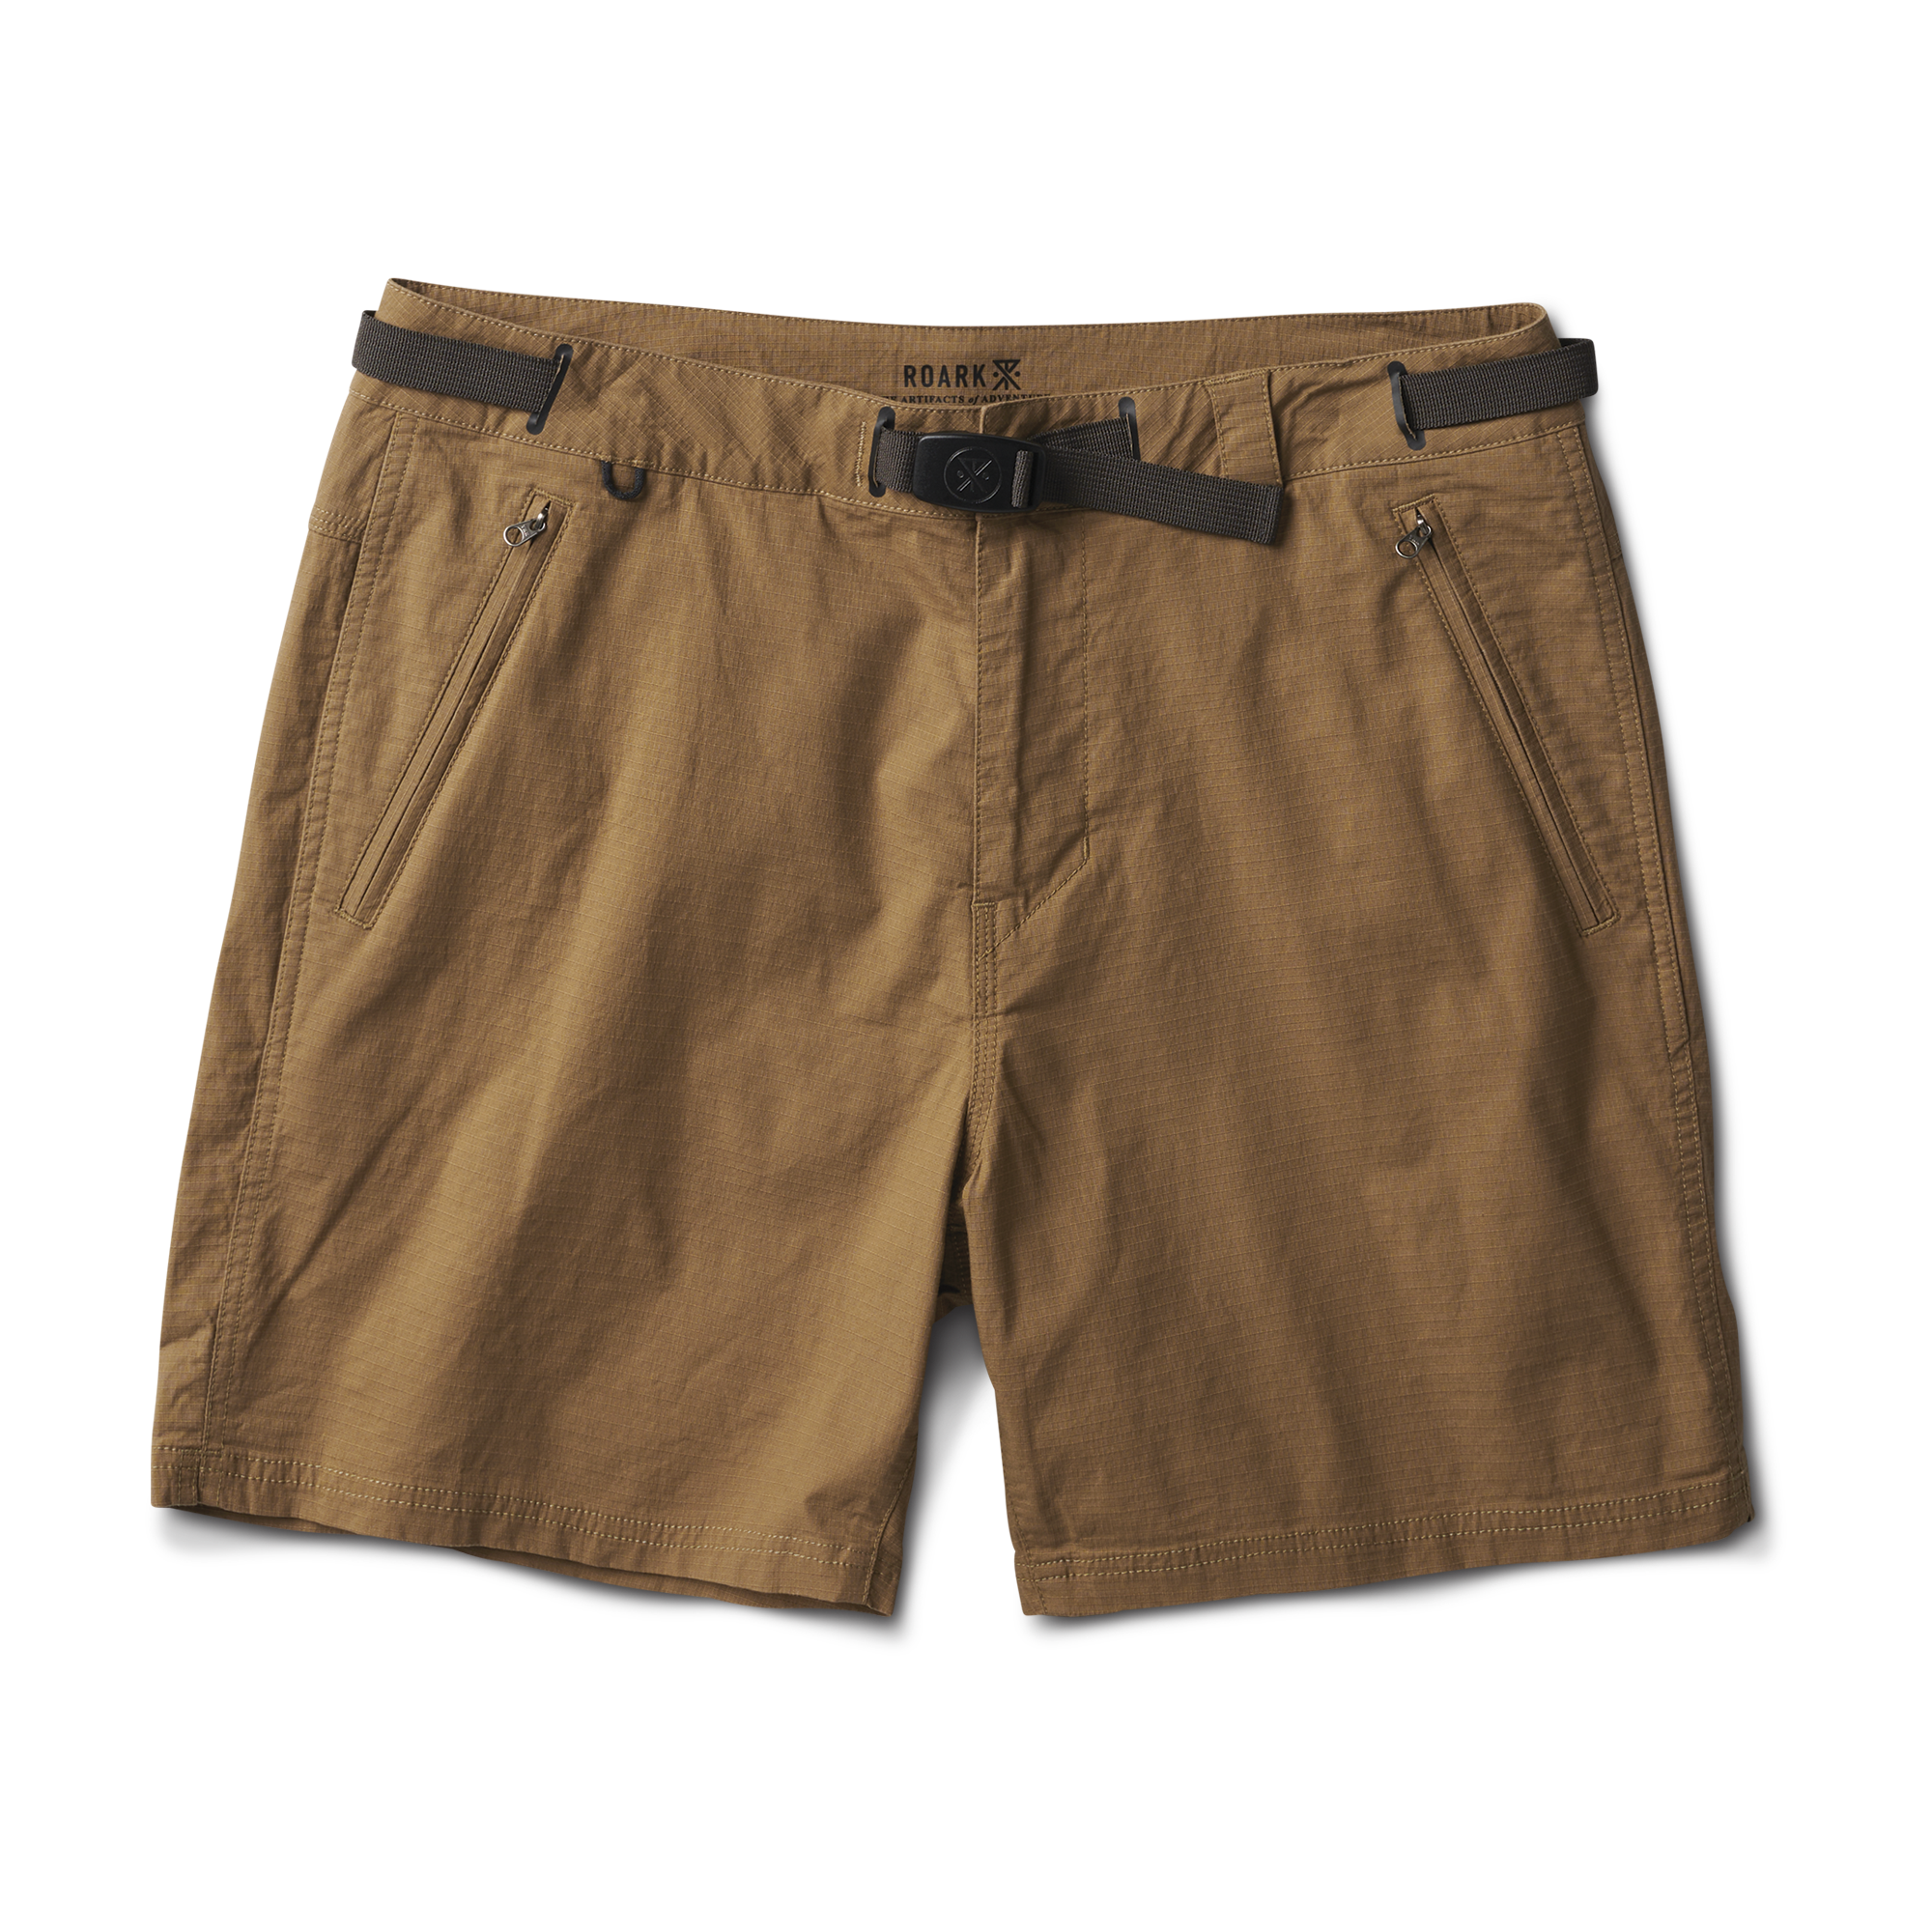 Shorts - Dark Campover Roark – Khaki 17\